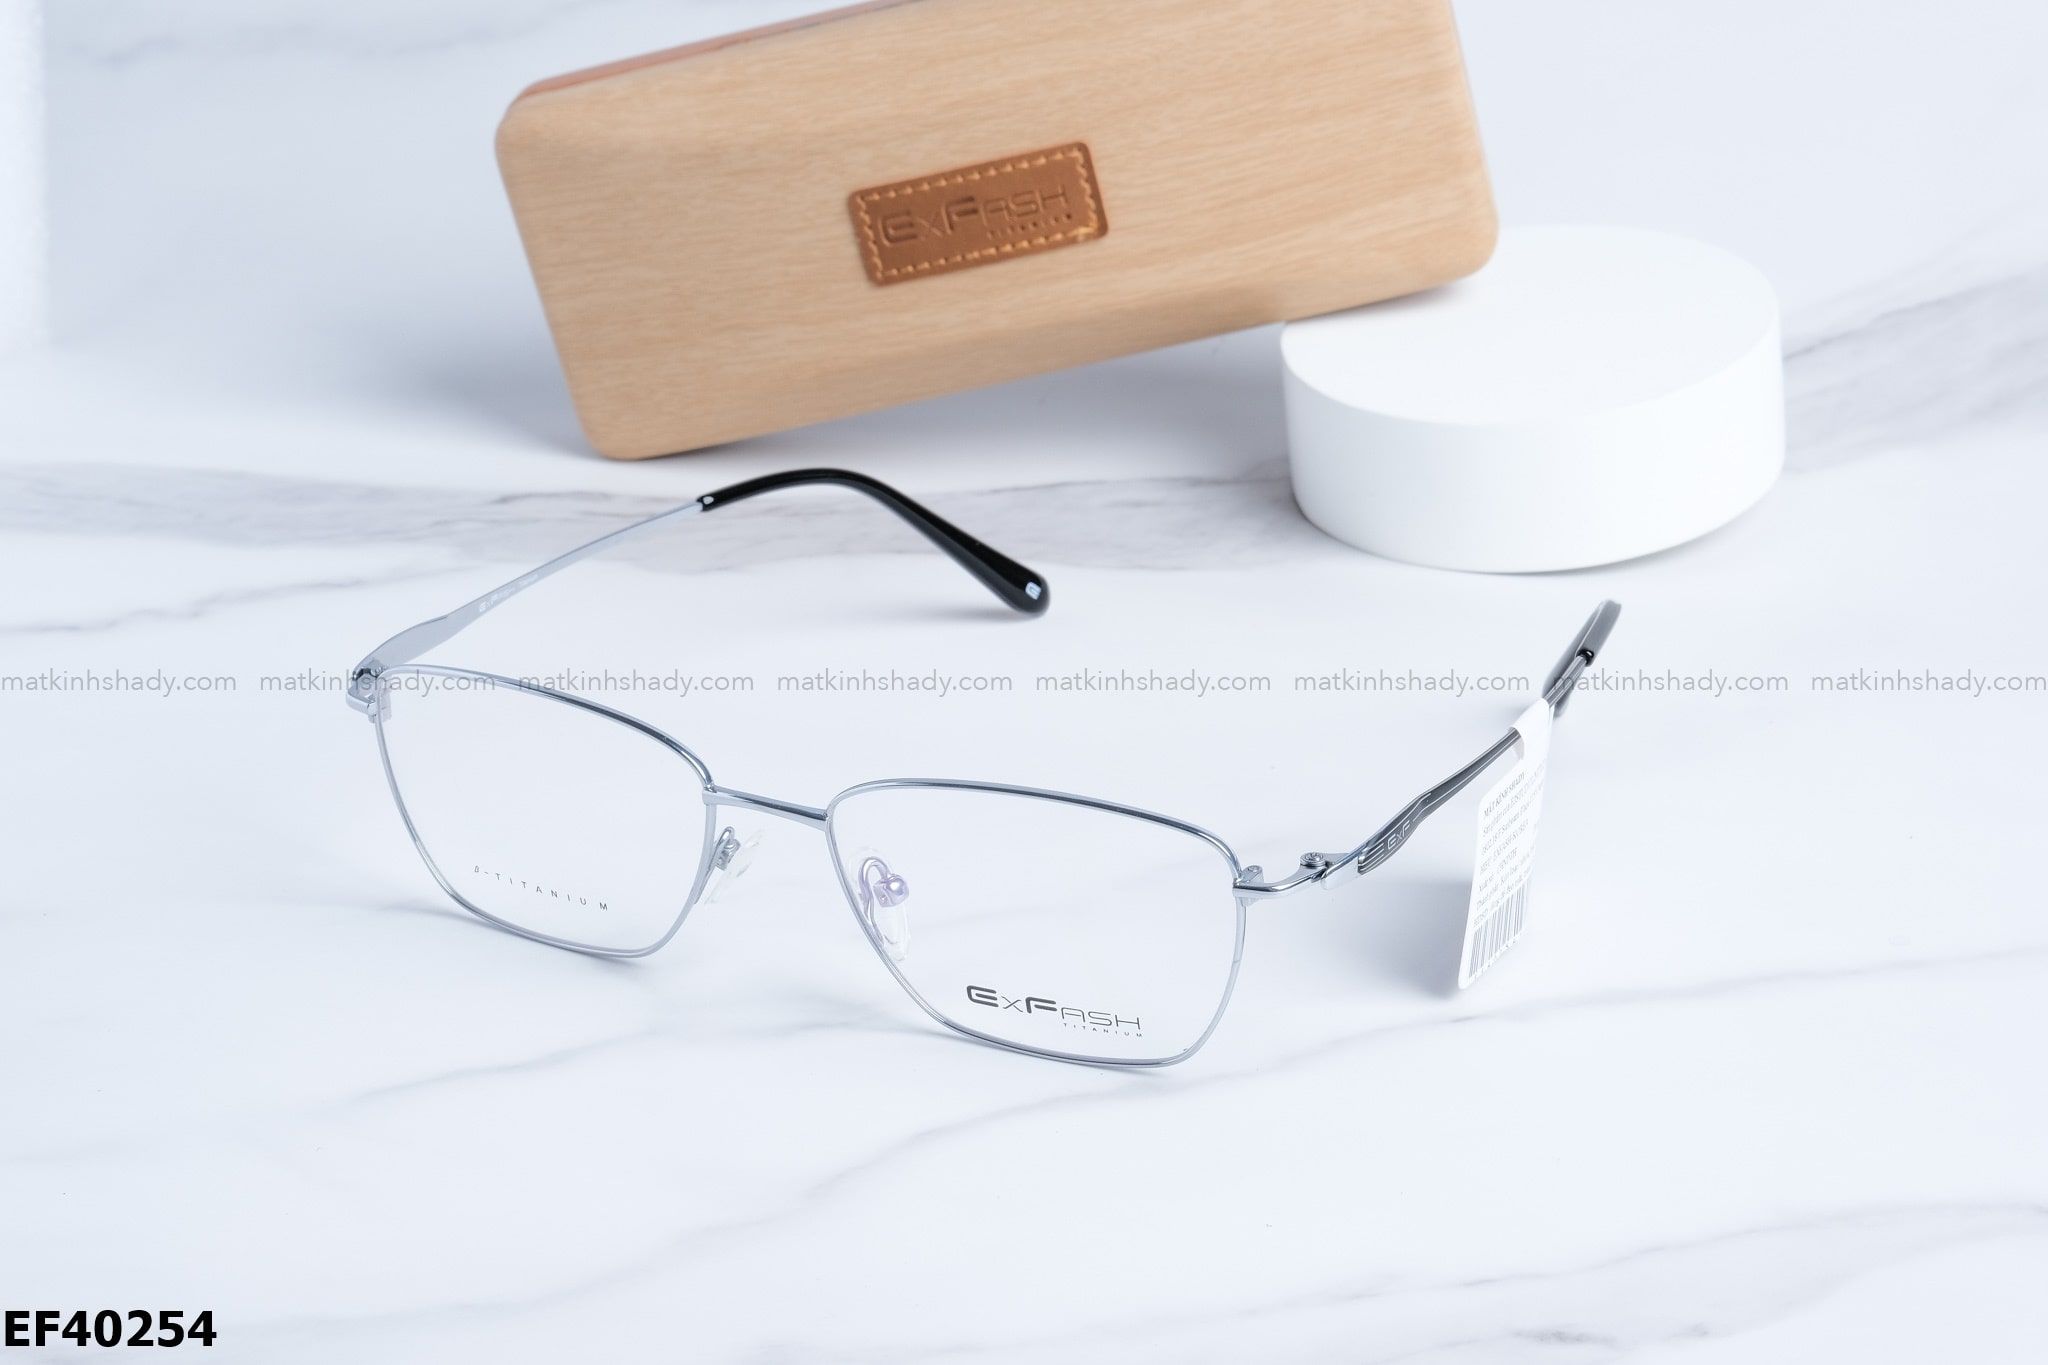  Exfash Eyewear - Glasses - EF40254 